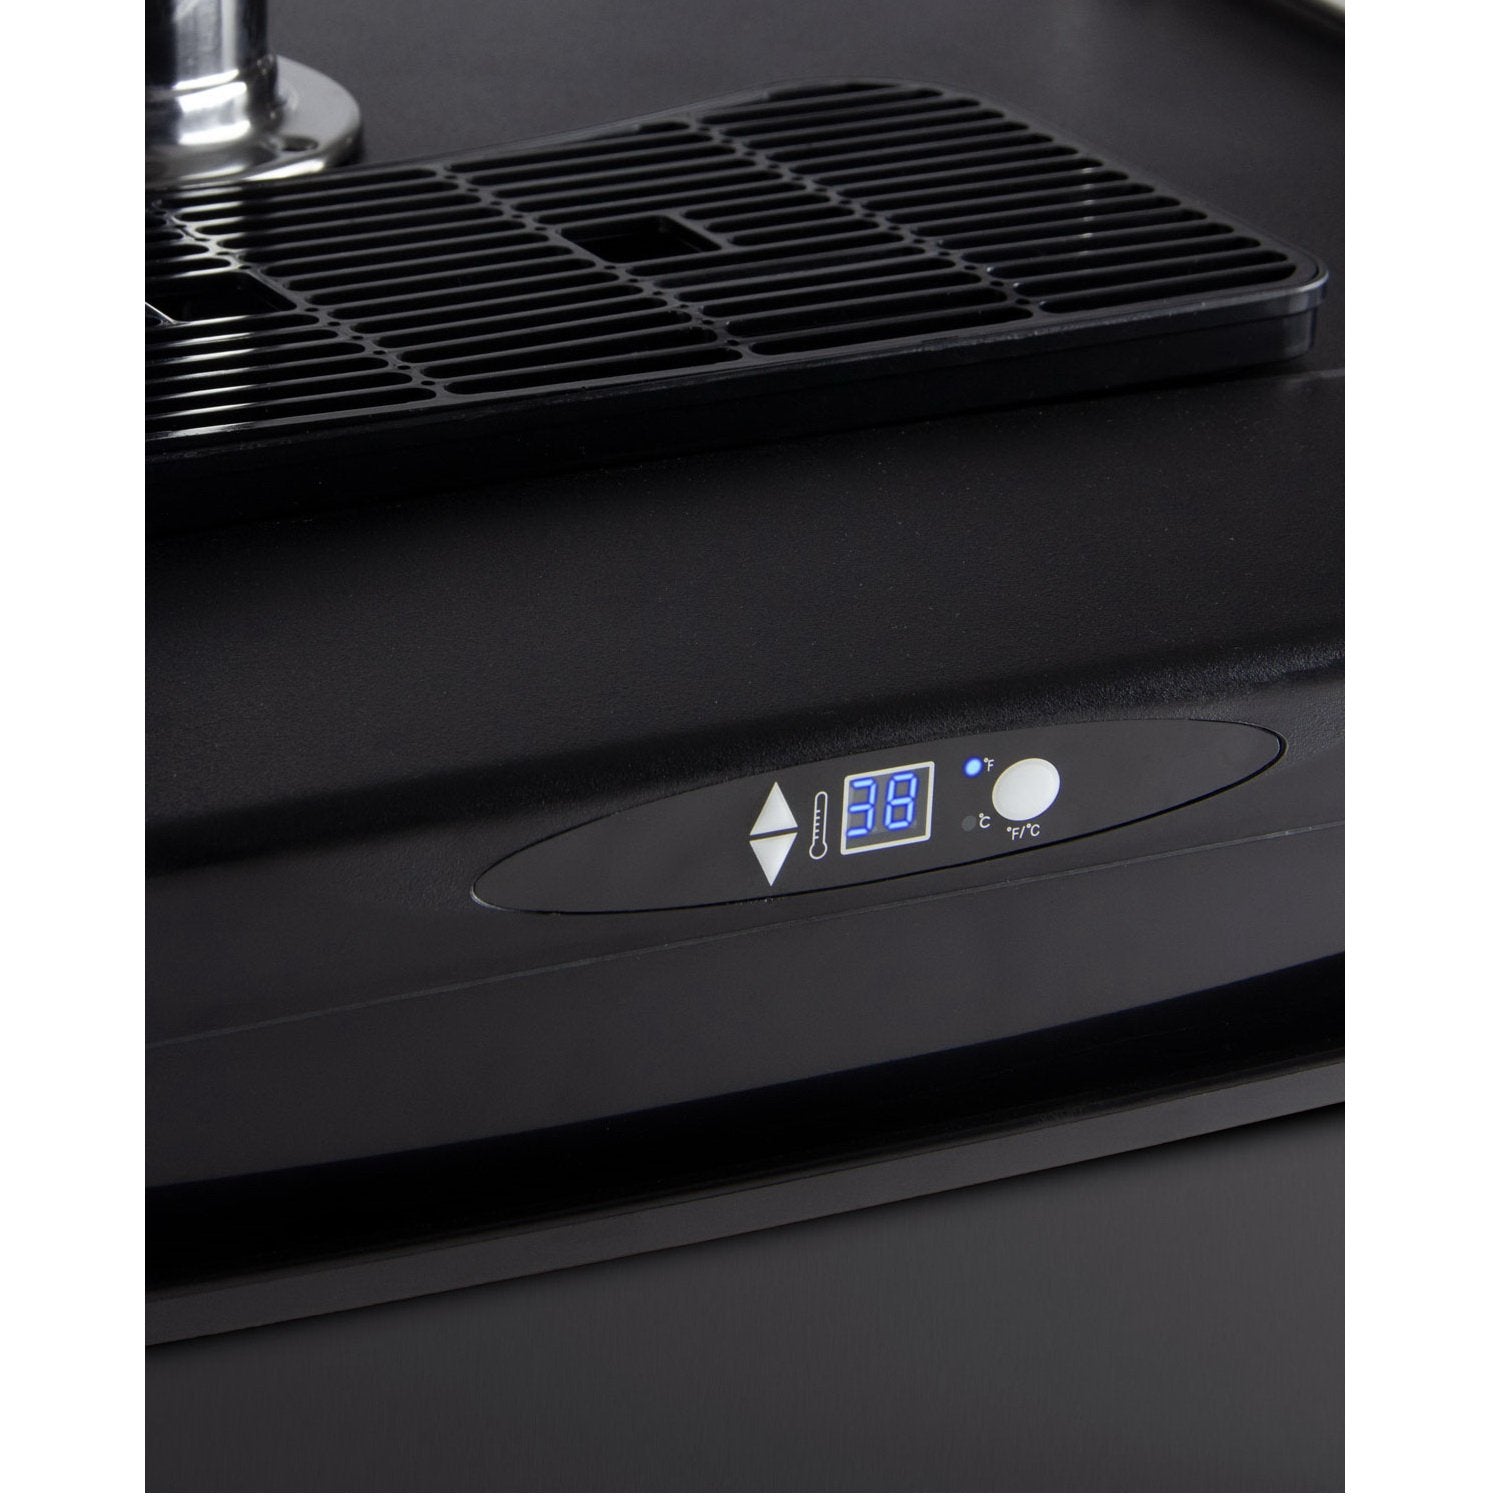 Kegco Dual Faucet Commercial Grade Digital Kombucharator - Black Cabinet with Black Door